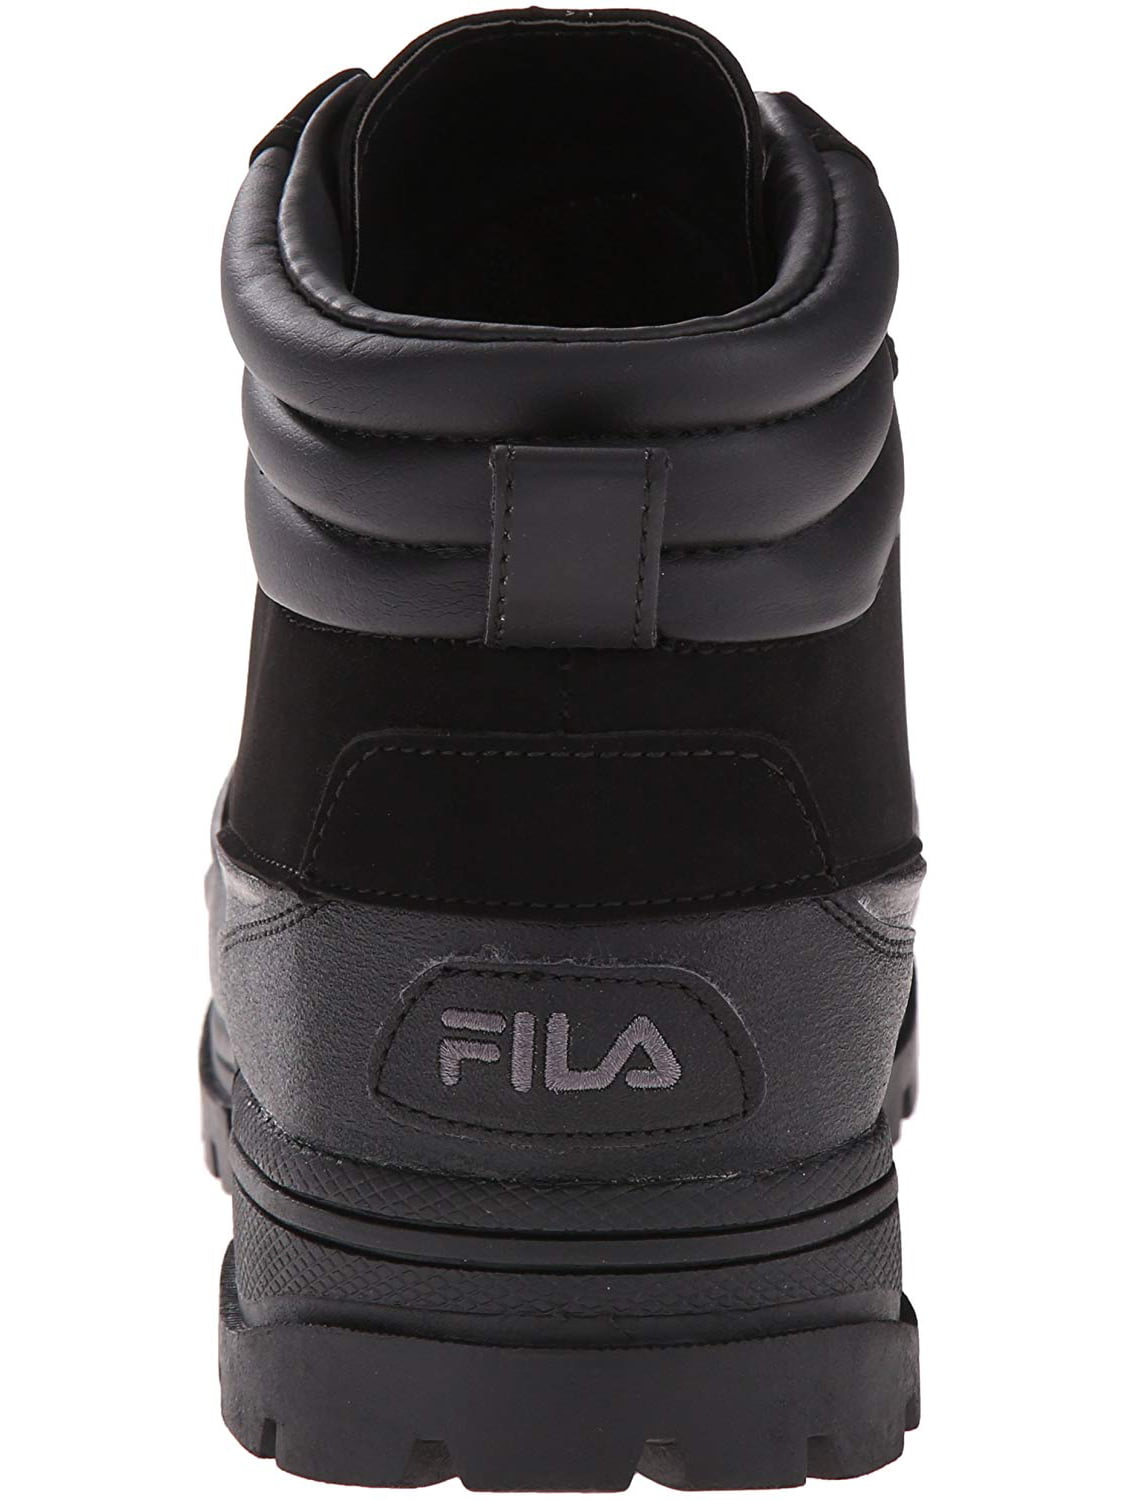 fila men's weathertec boot